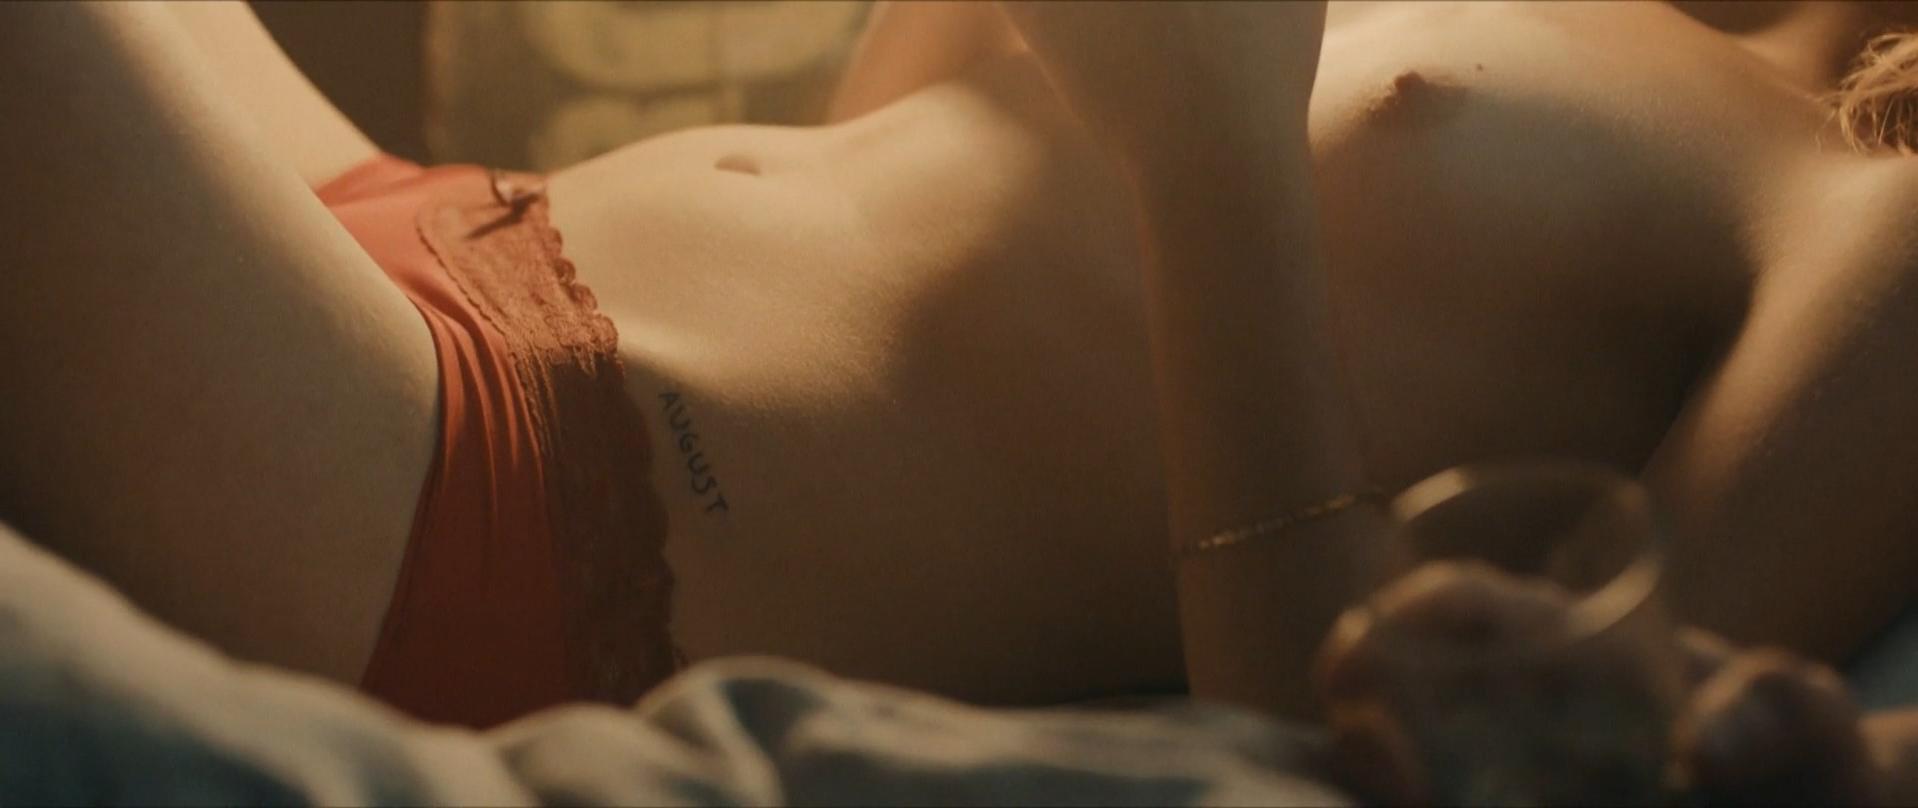 Nude Video Celebs Victoria Carmen Sonne Nude I Blodet 2016